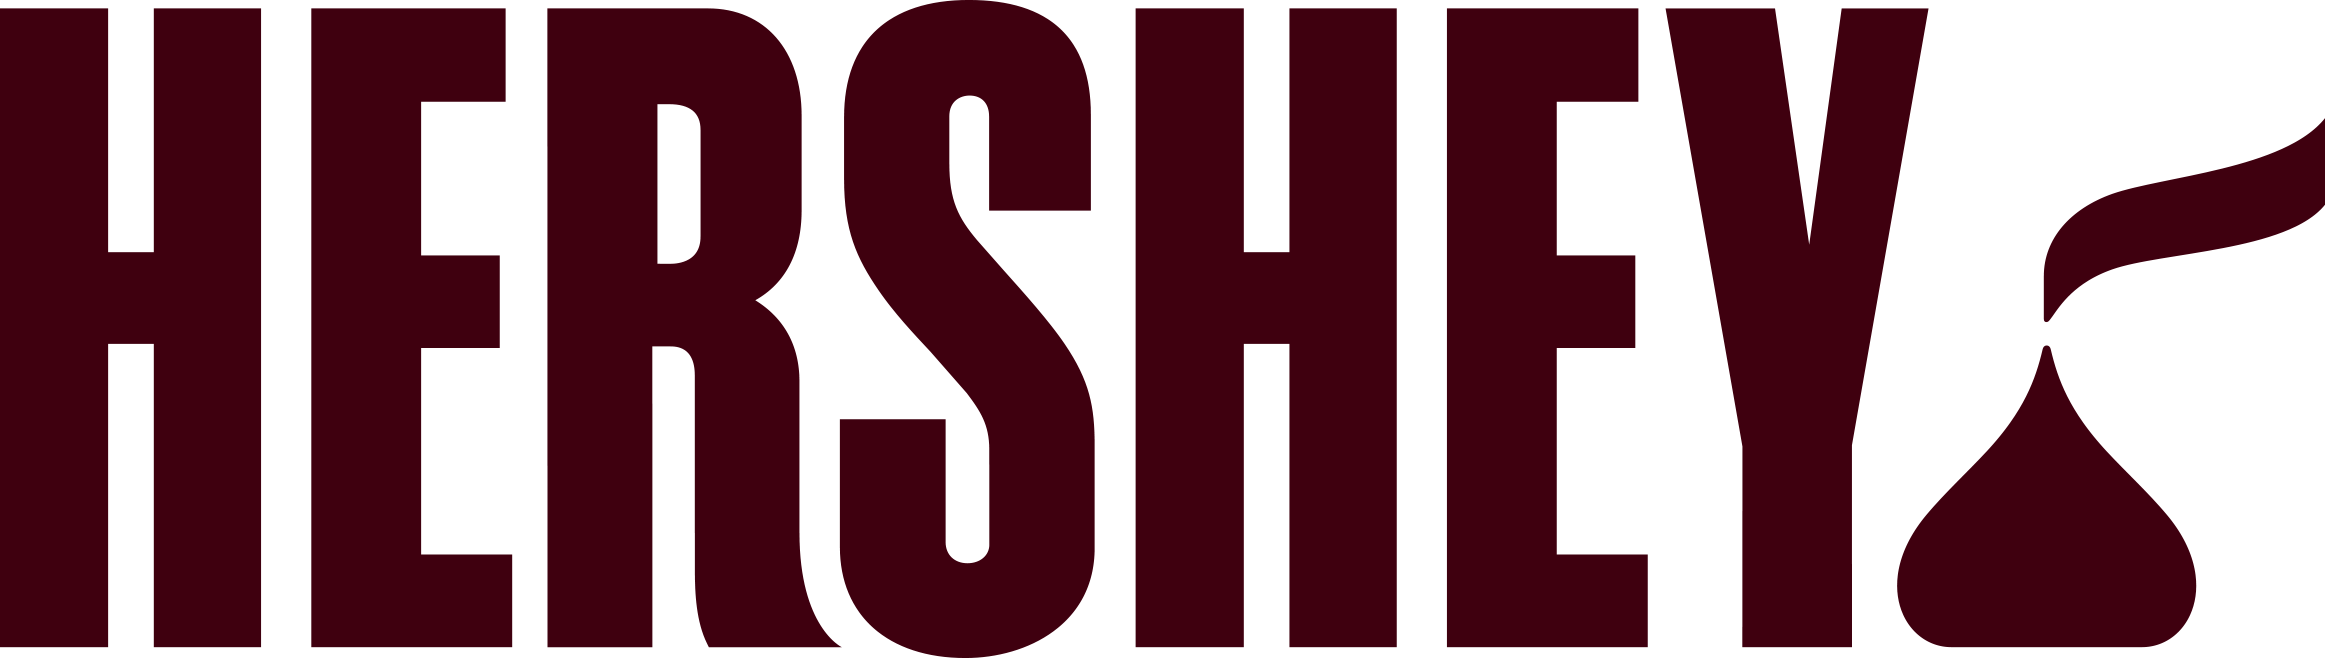 Logo for hershey